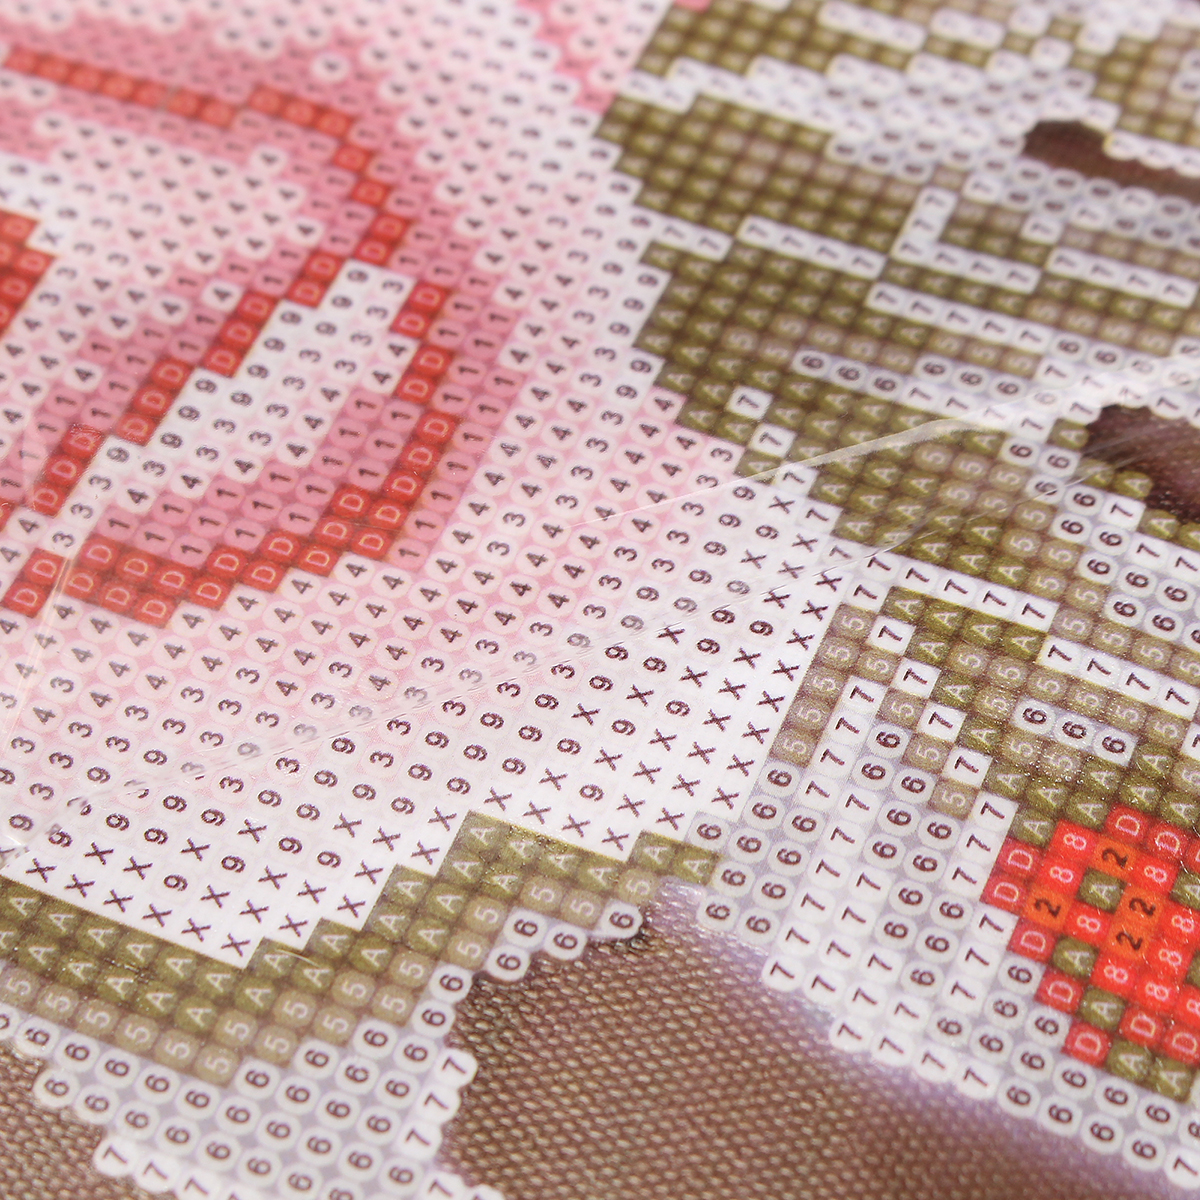 DIY-5D-Diamond-Painting-Kit-Retro-Flower-Handmade-Craft-Cross-Stitch-Embroidery-Home-Office-Wall-Dec-1350574-11